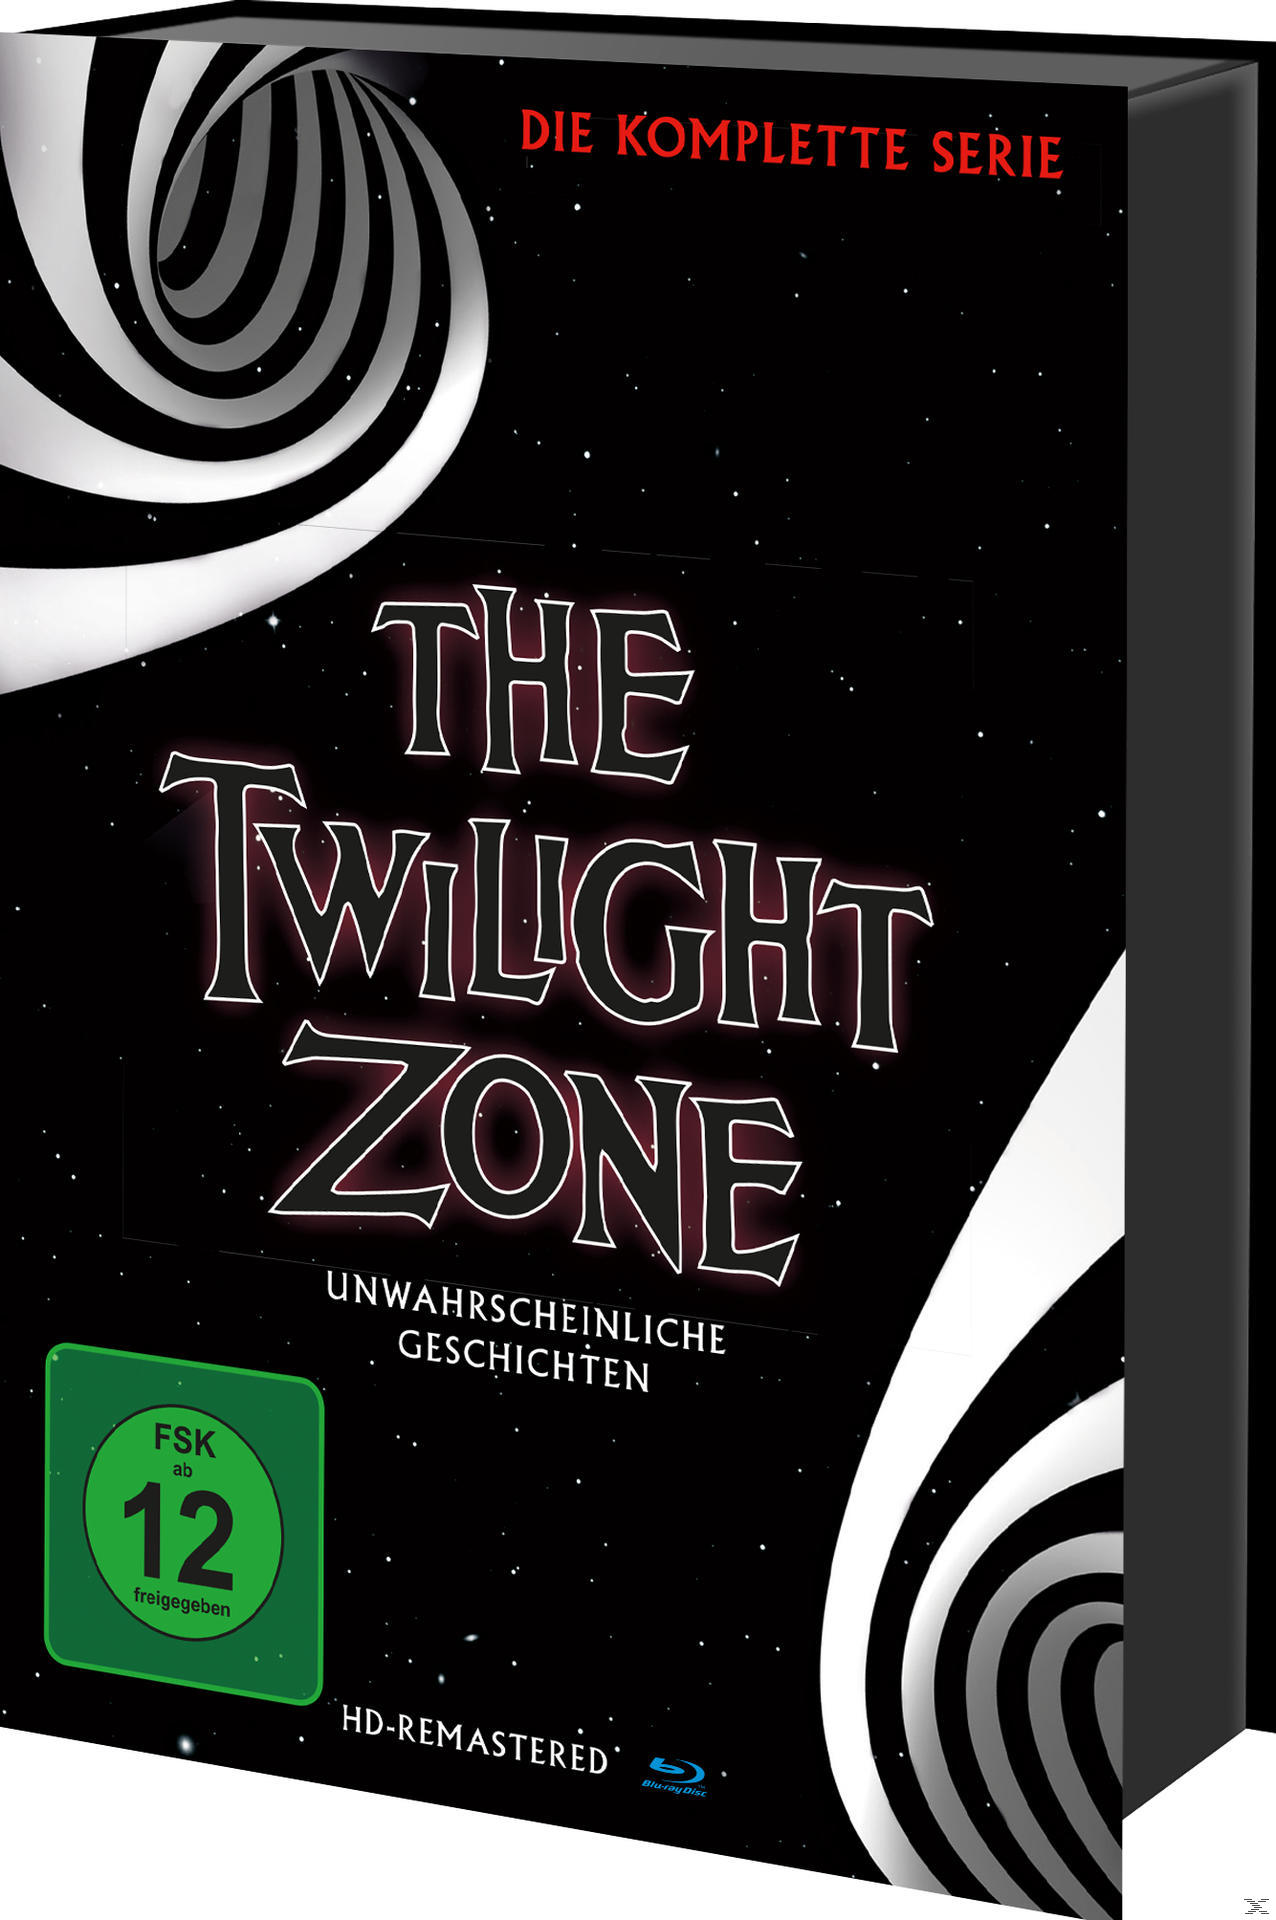 komplette Serie The - Twilight Zone Blu-ray Die